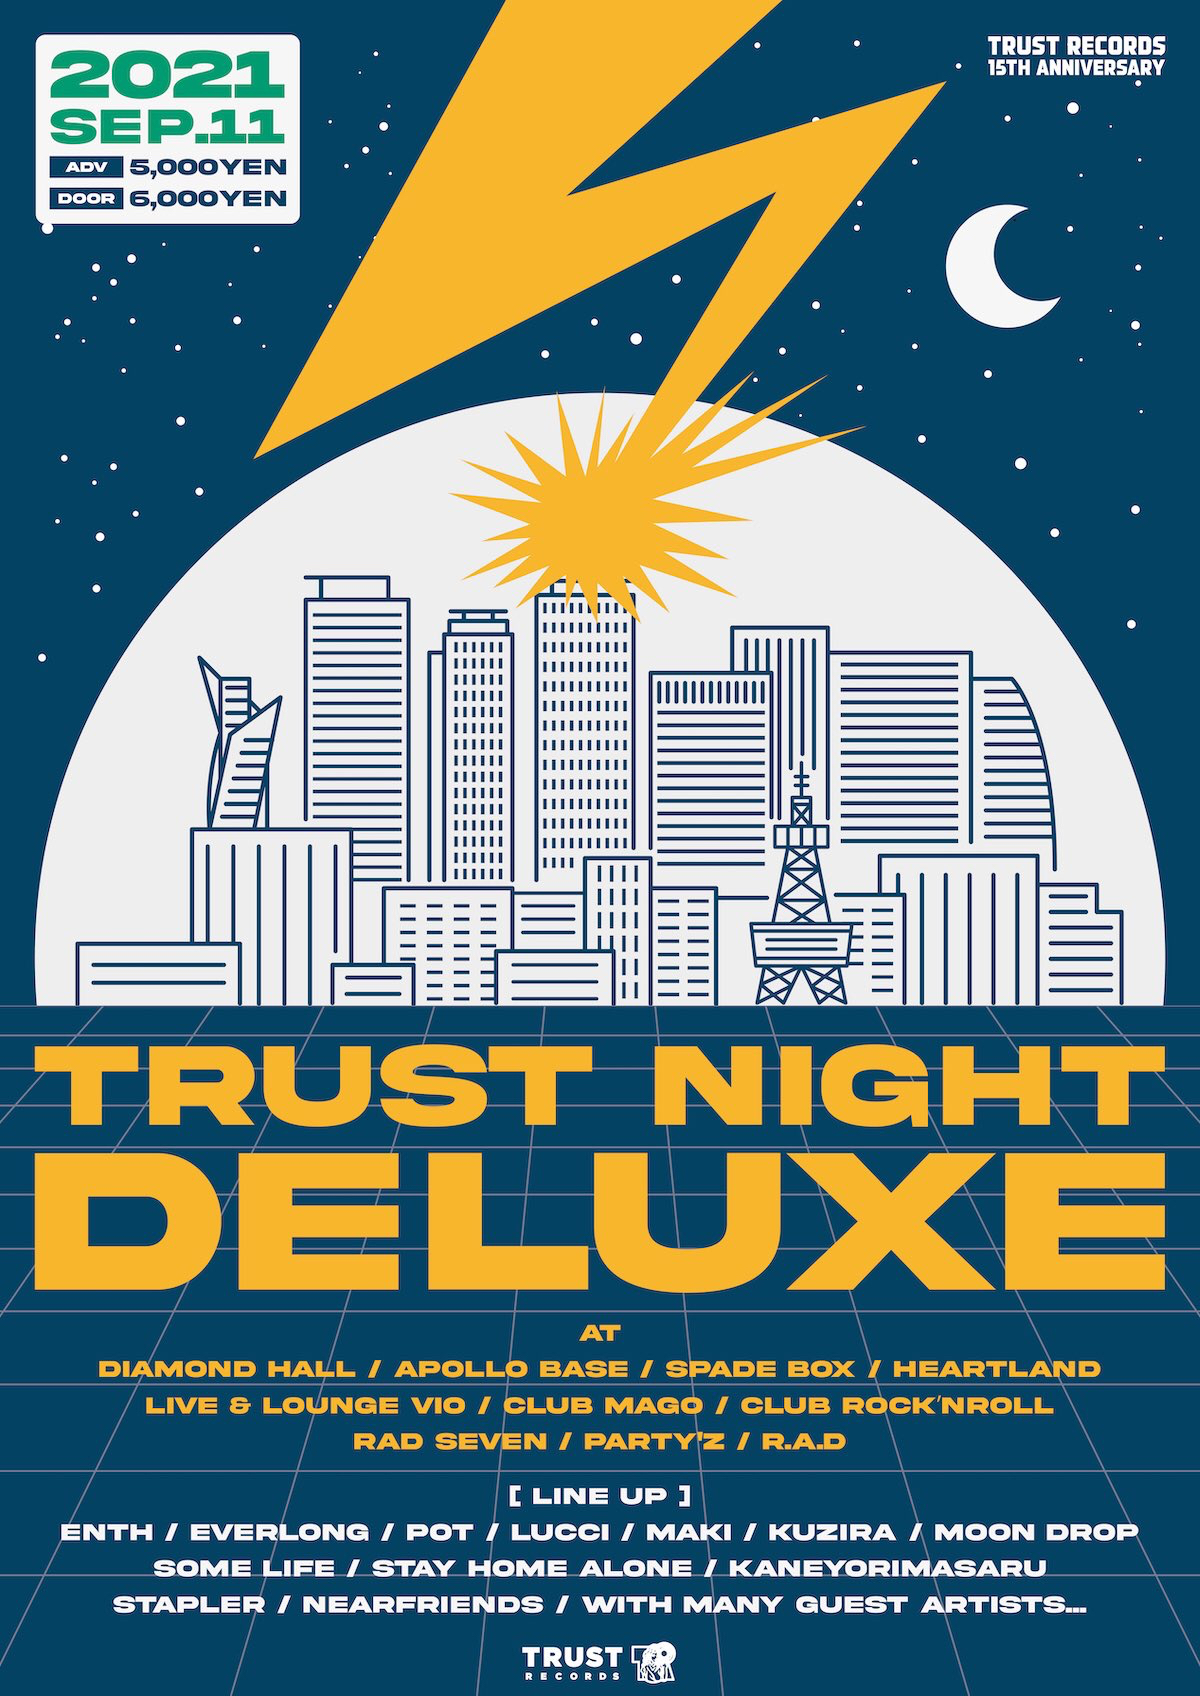 TRUST RECORDS presents. TRUST NIGHT DELUXE